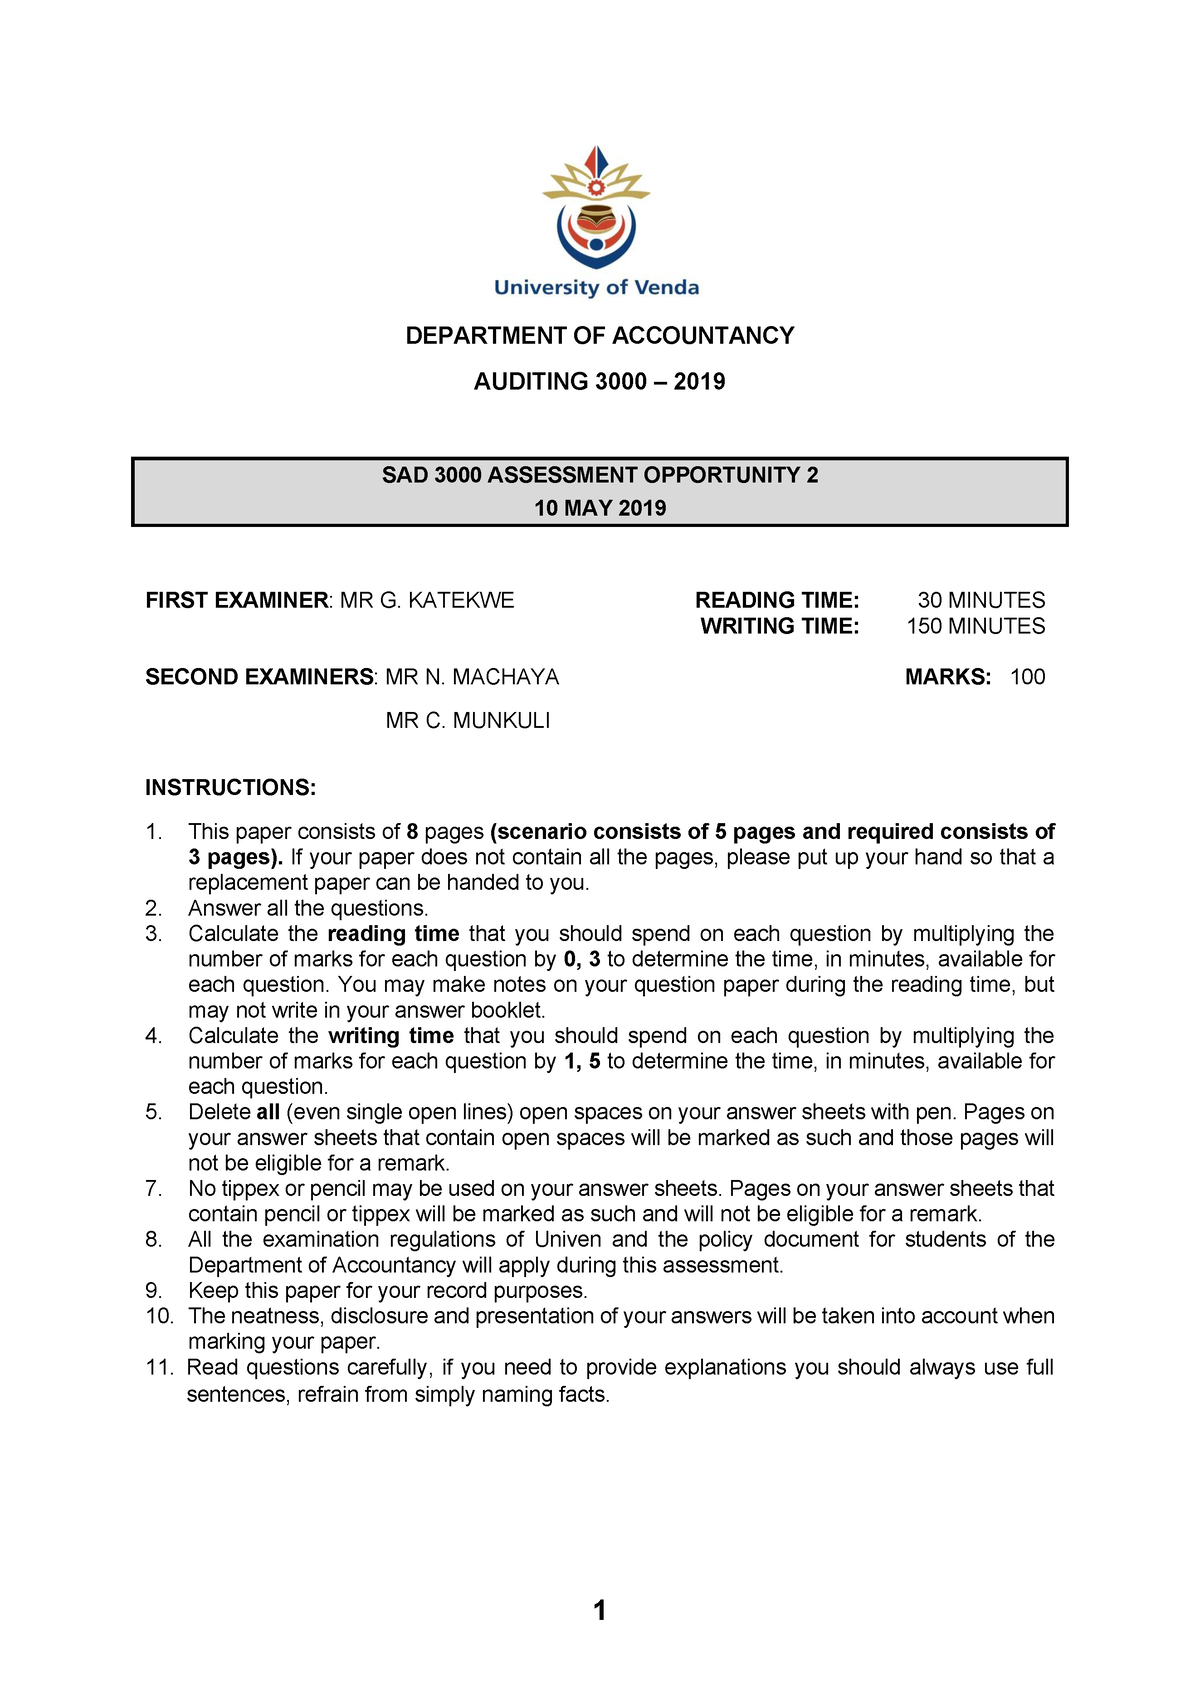 2019 Assessment Opportunity 2 scenario - DEPARTMENT OF ACCOUNTANCY ...